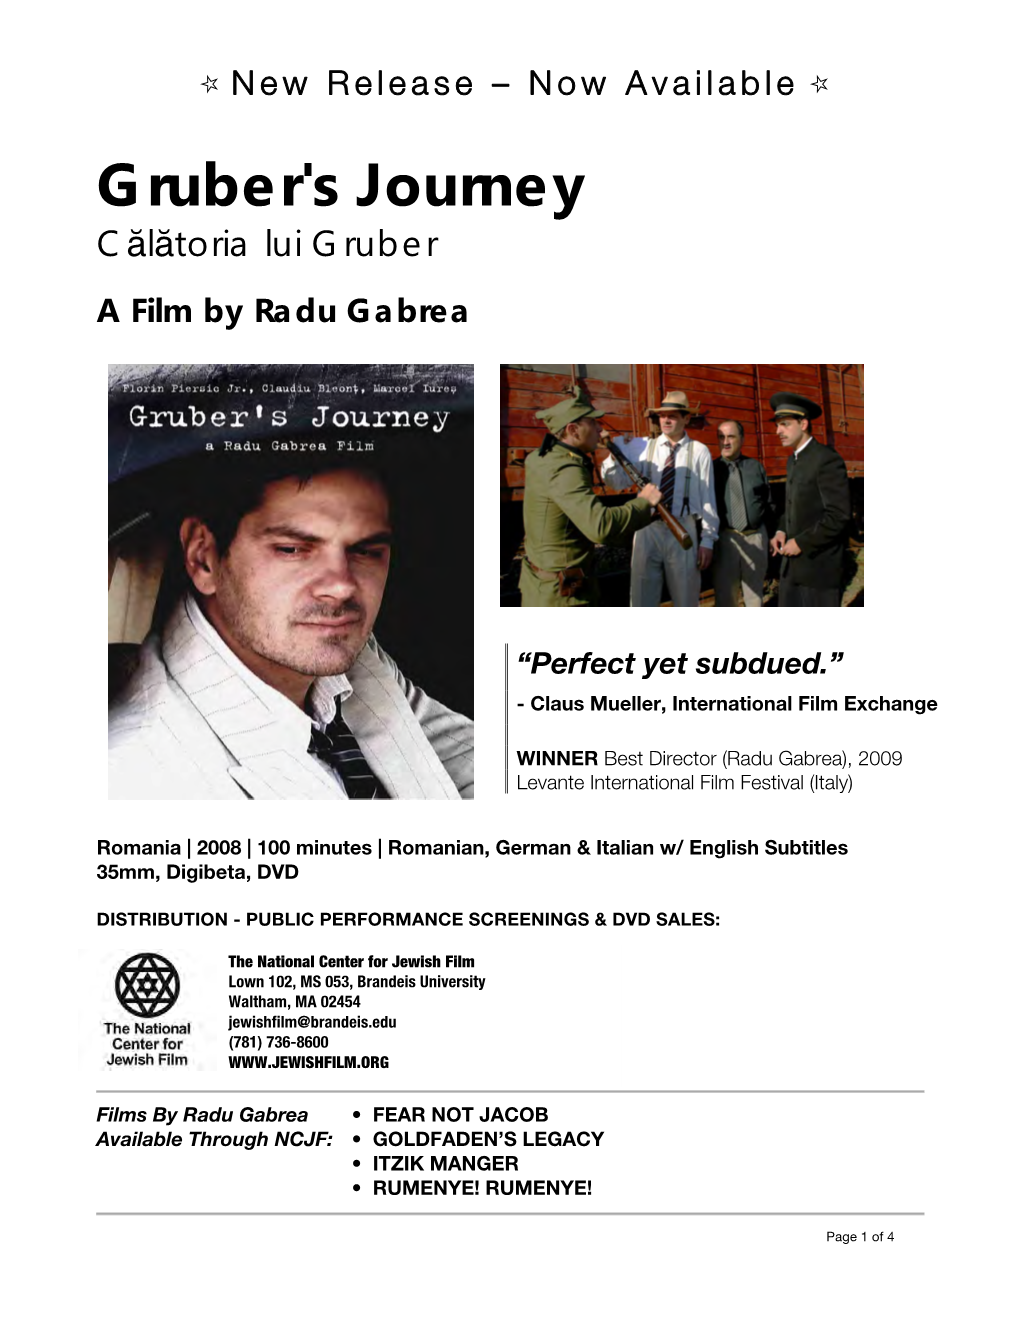 Gruber's Journey Press